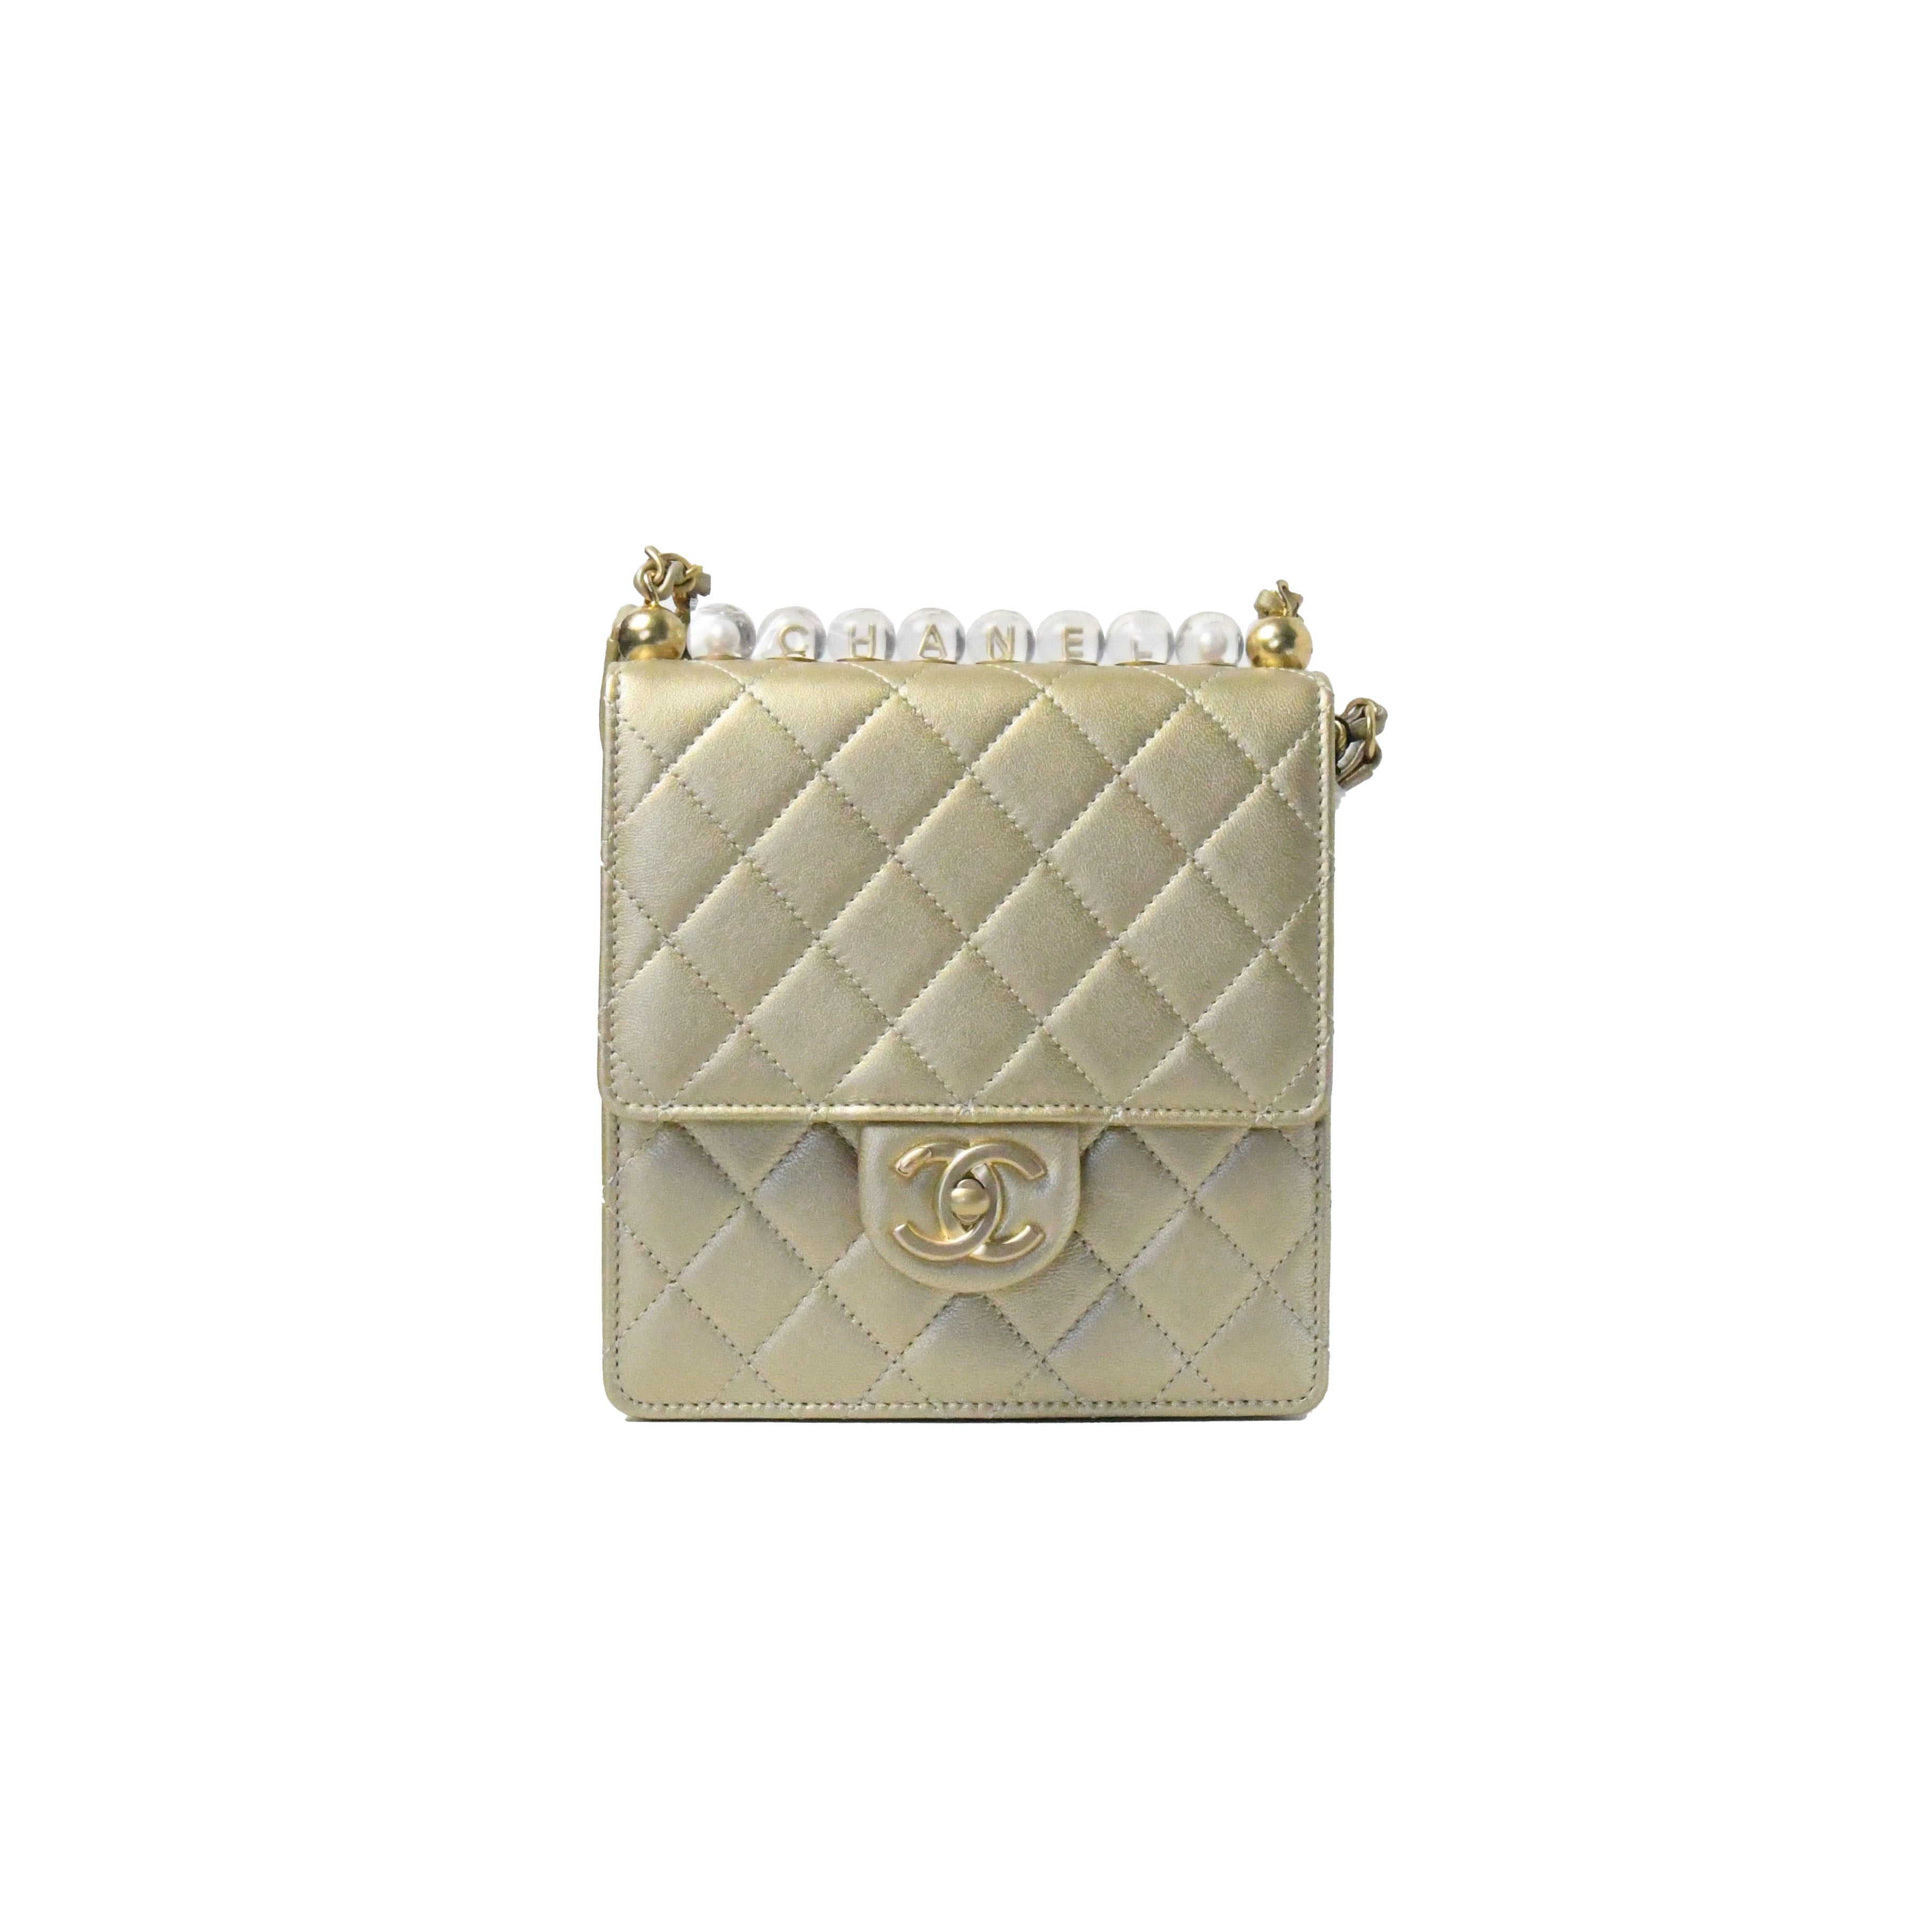 Chanel Gold-Tone Metal Flap Bag